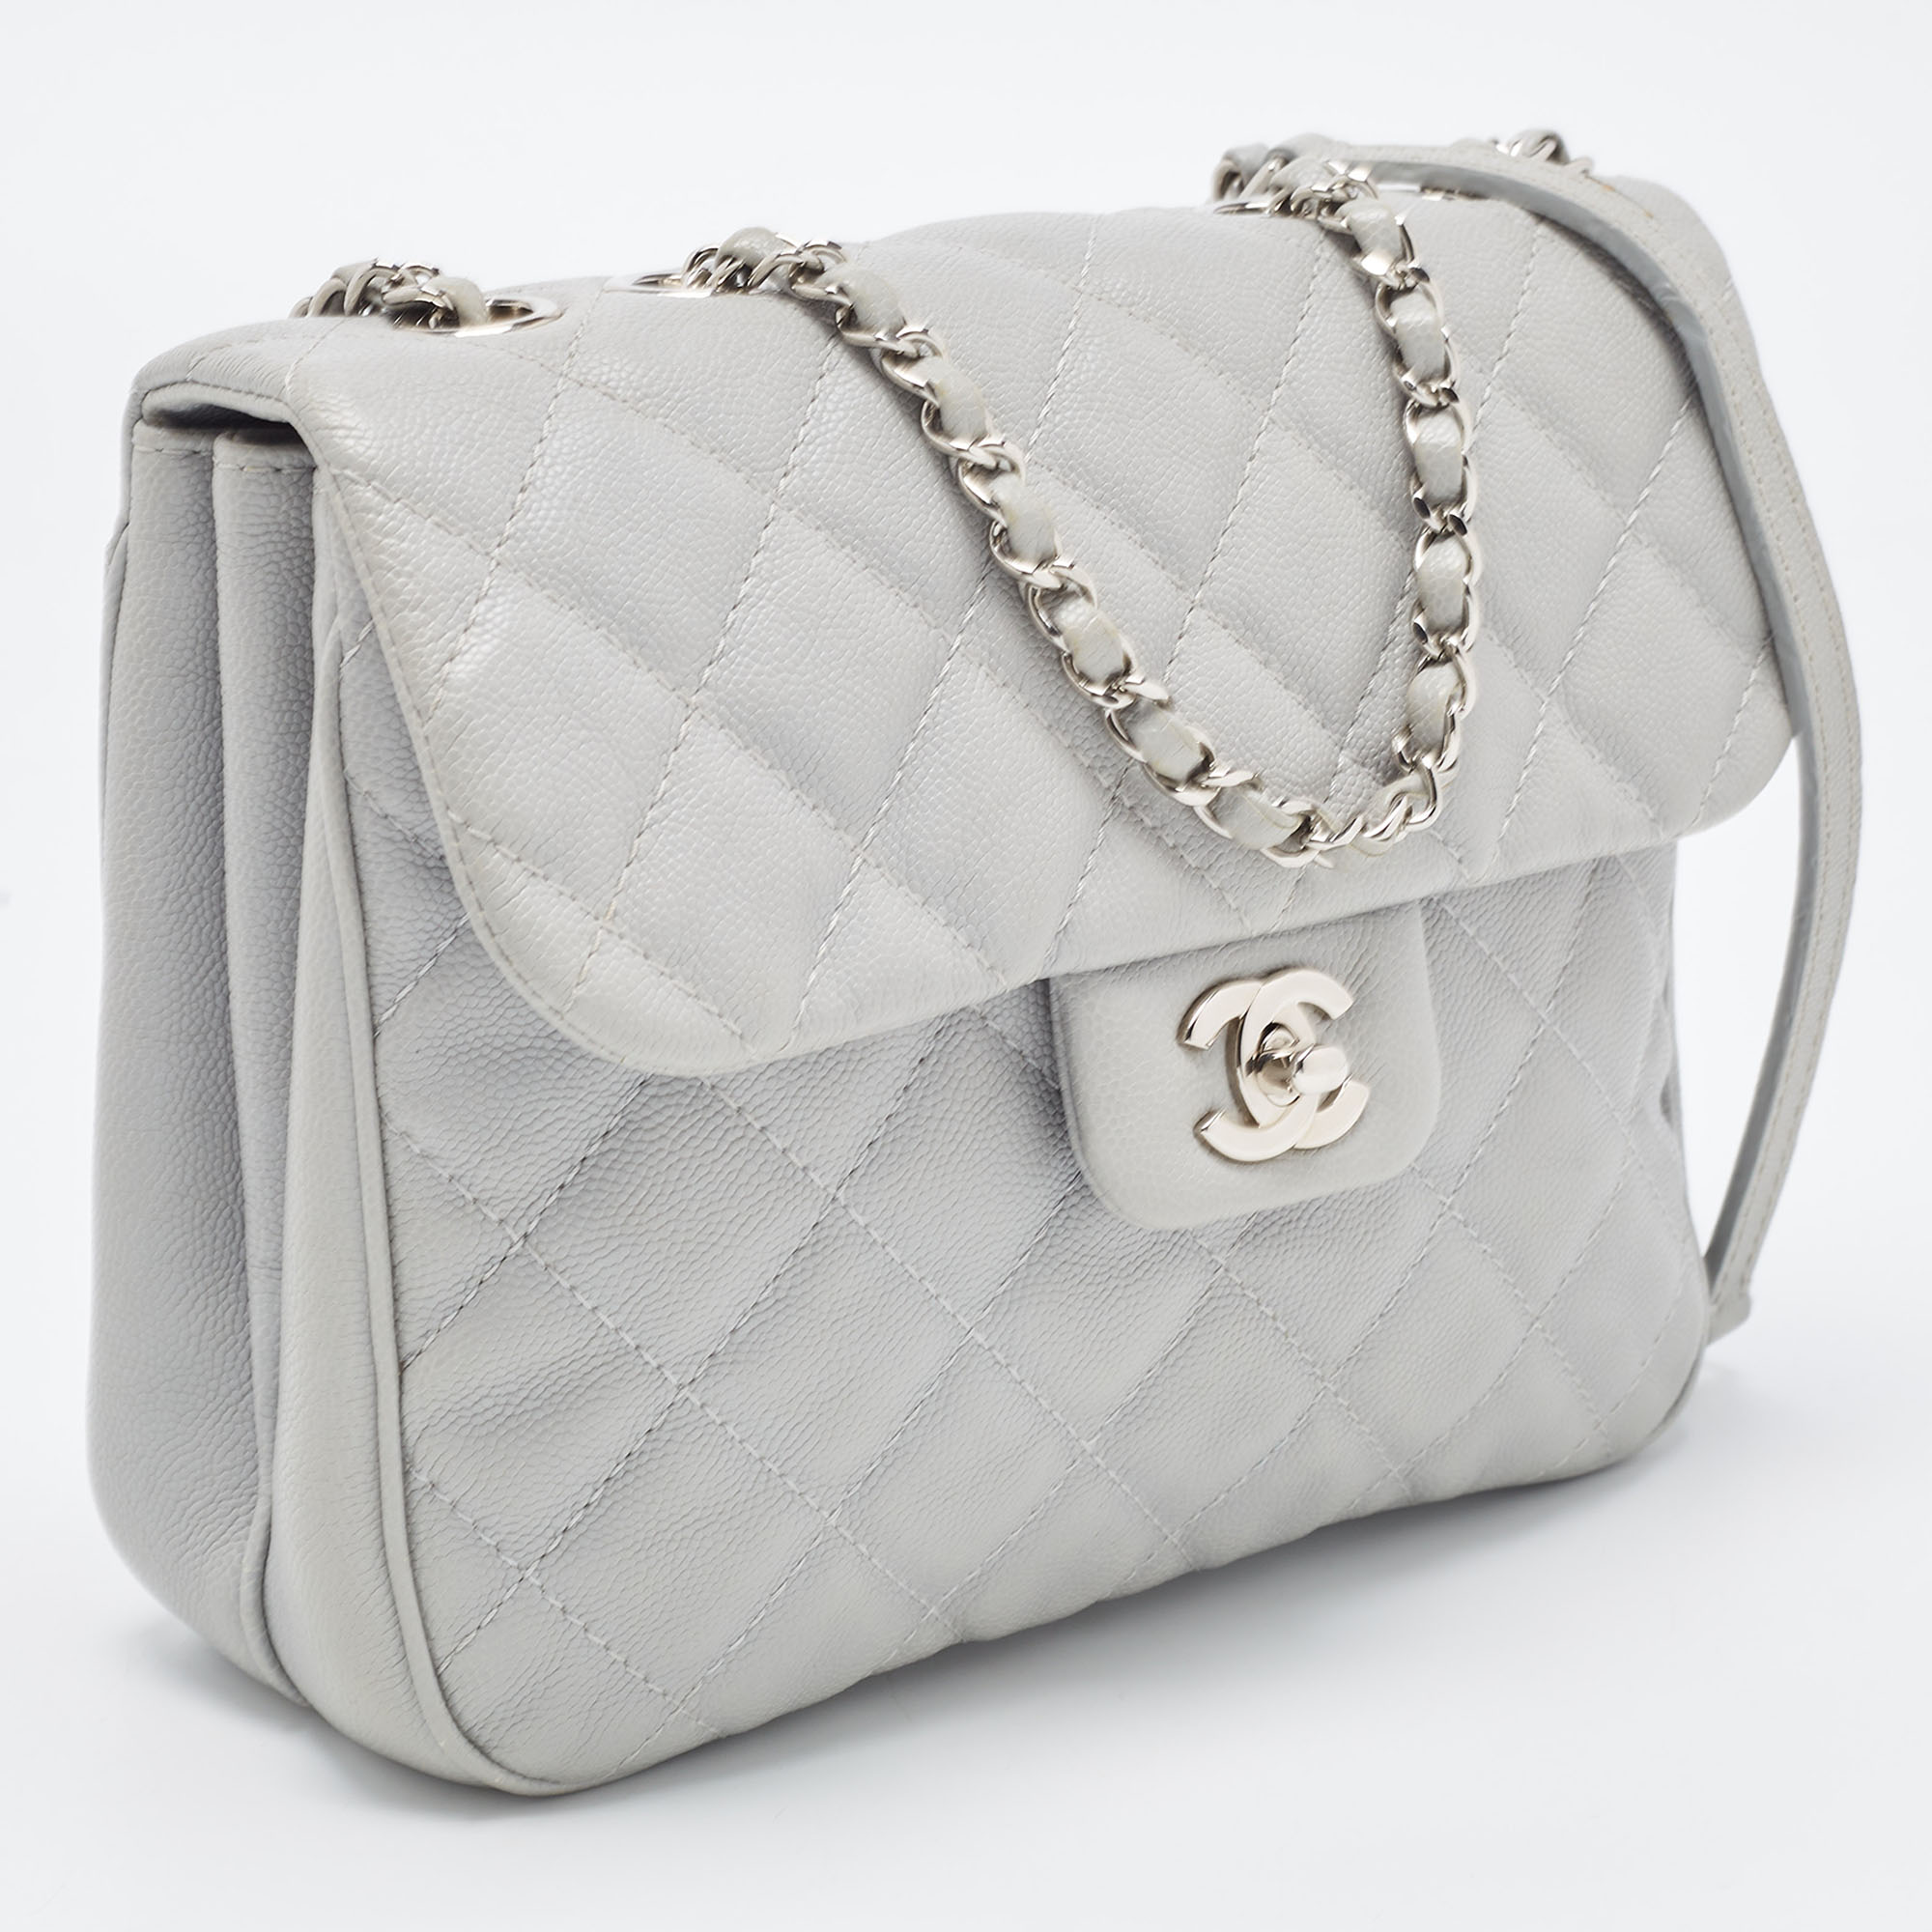 Chanel Grey Caviar Leather Medium Urban Companion Flap Bag